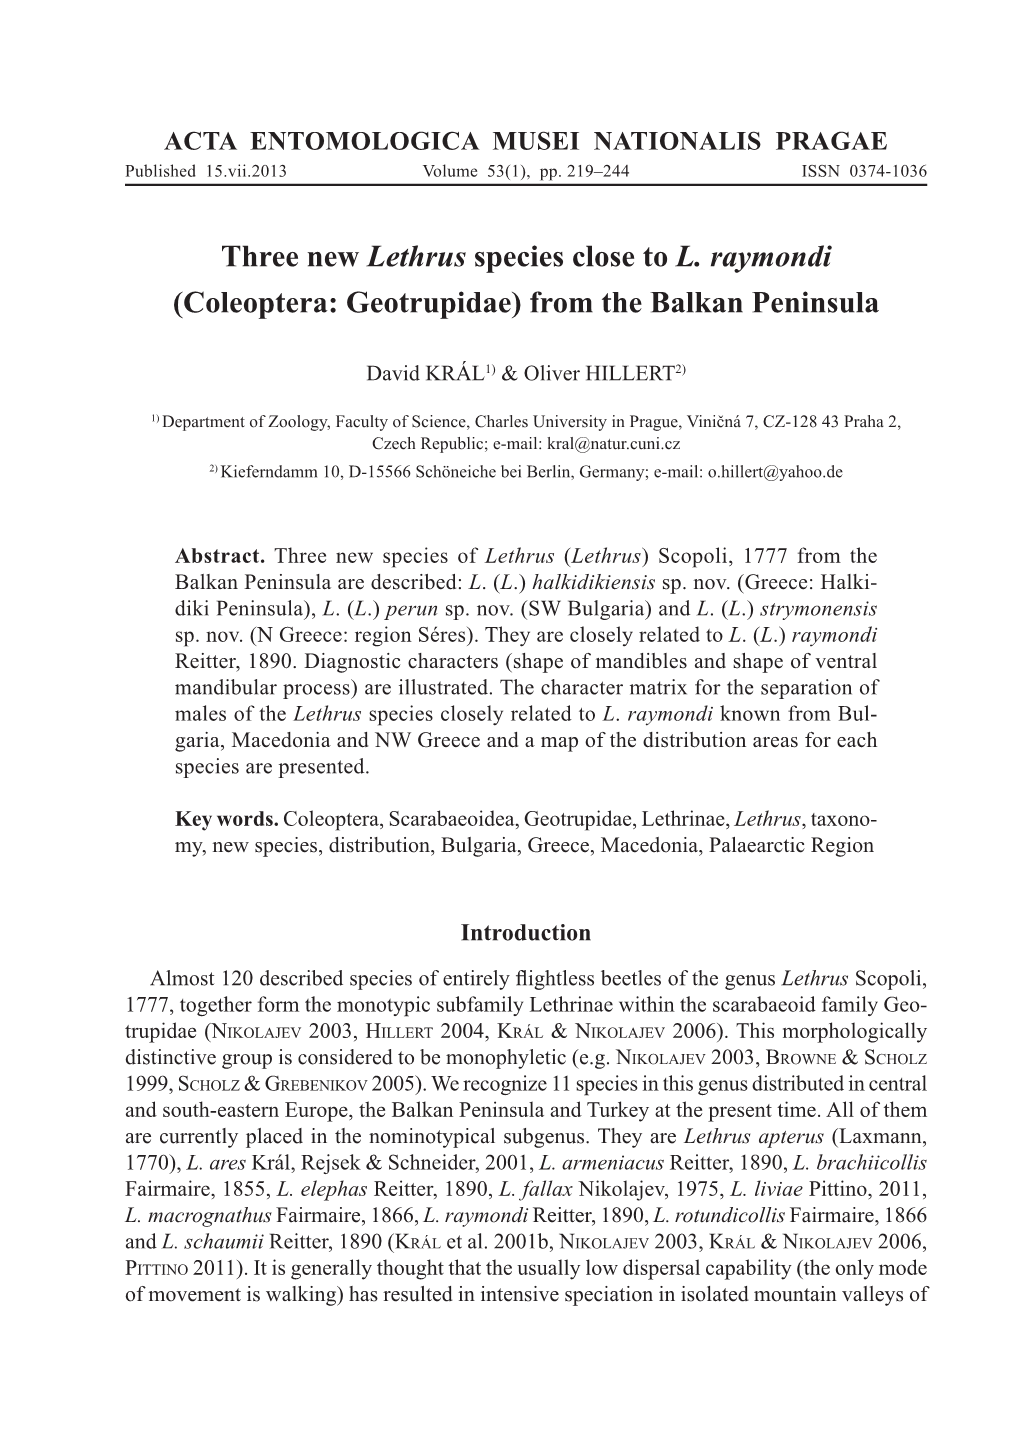 Three New Lethrus Species Close to L. Raymondi (Coleoptera: Geotrupidae) from the Balkan Peninsula